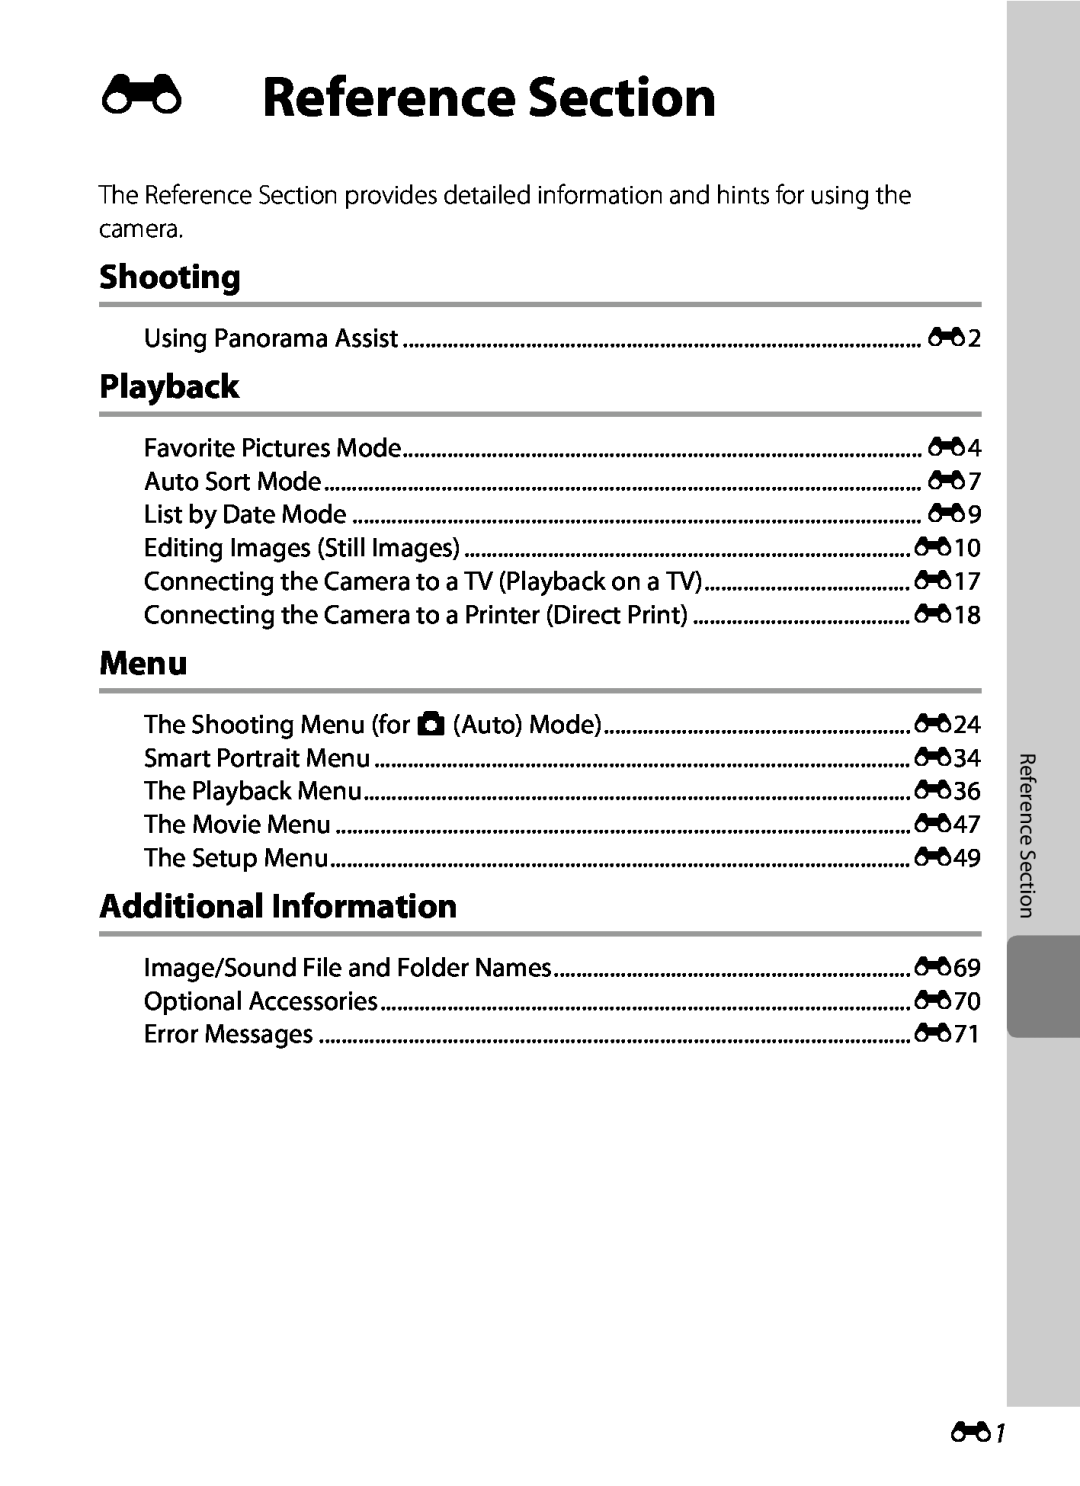 Nikon S2600 manual E Reference Section, Shooting, Menu, Additional Information, Playback 